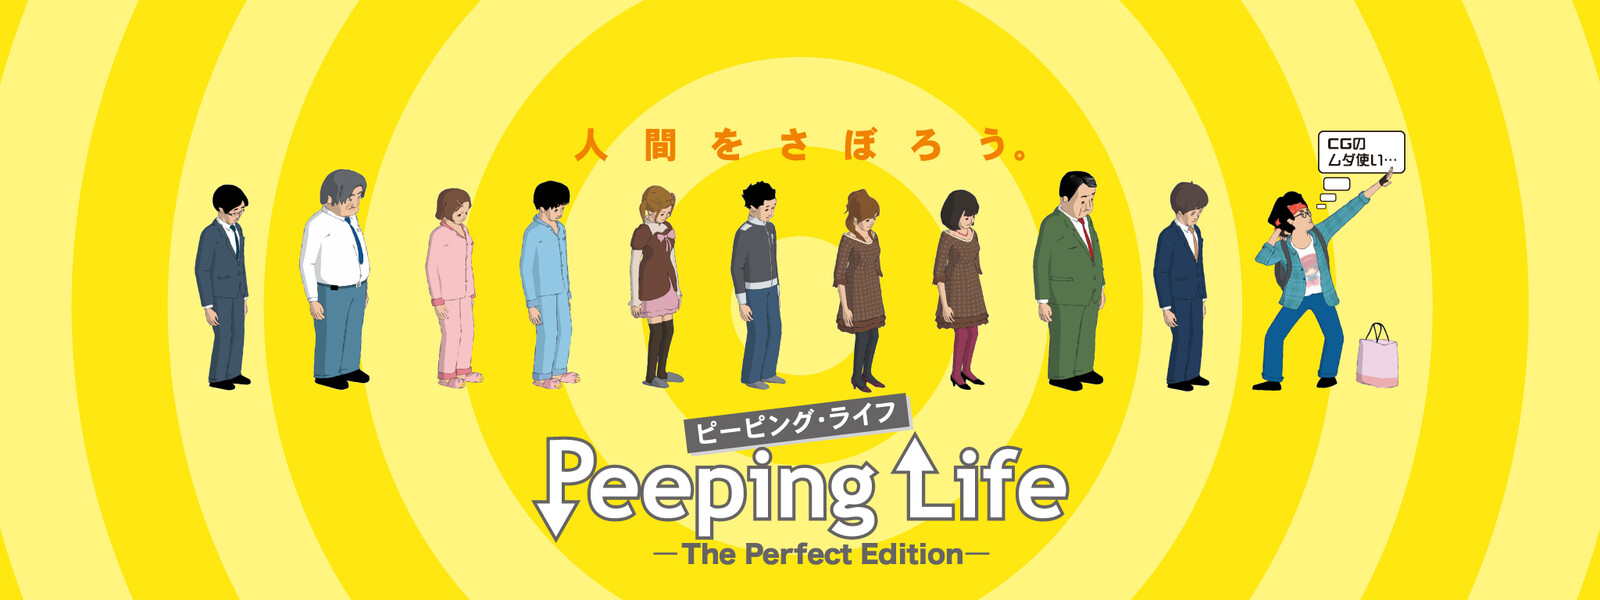 Peeping Life (ピーピング･ライフ) -The Perfect Edition- イエロー盤の動画 - Peeping Life (ピーピング･ライフ) TV シーズン 1 ??